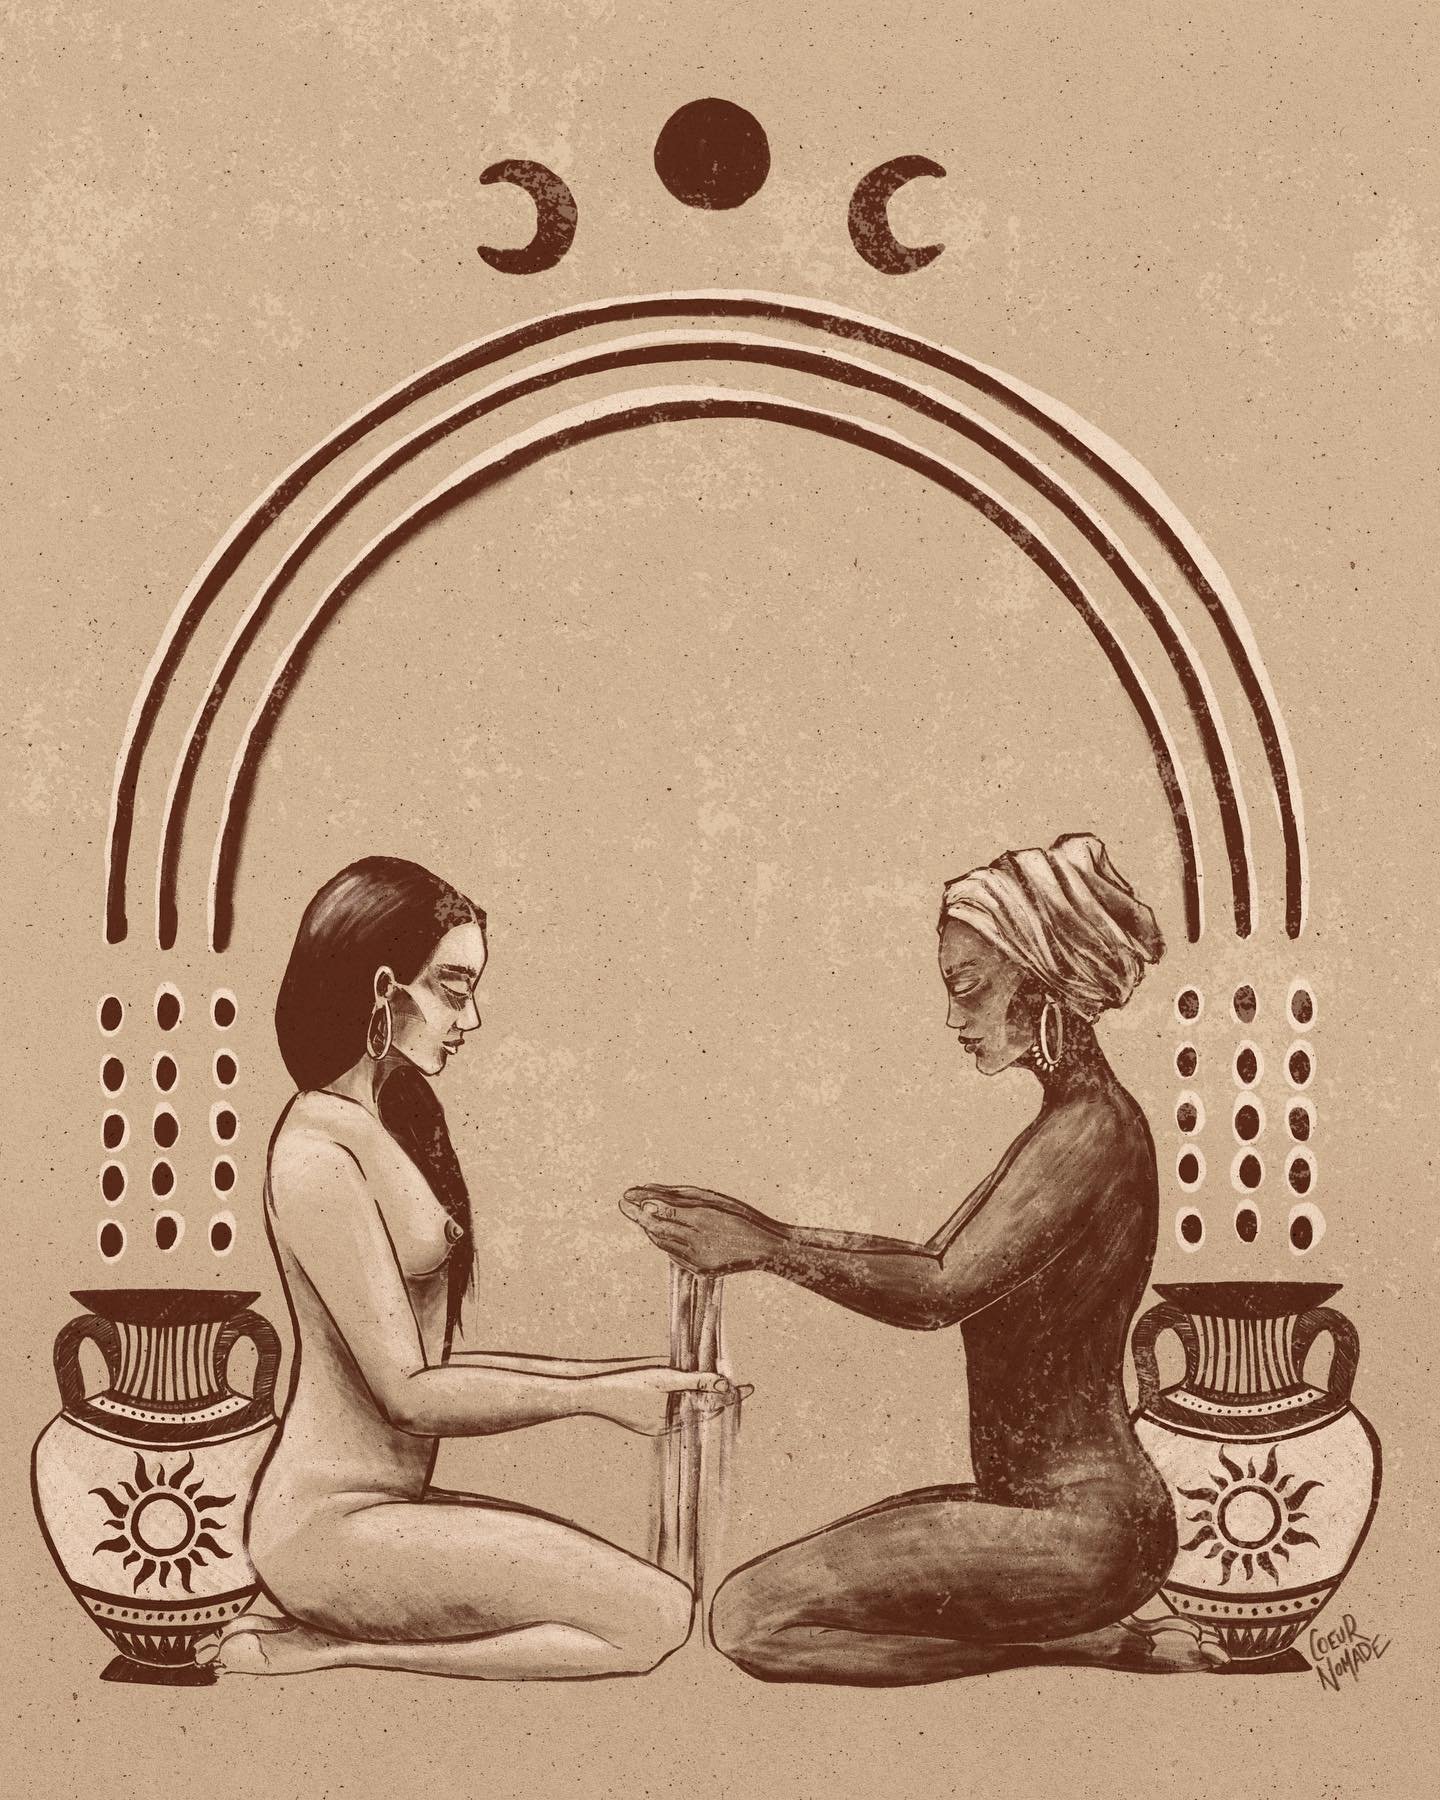 ❁ ❁ MAI ❁ ❁

#illustration #womencircle #spiritualillustration #drawing #tattoo #handpoke #ritual #illustrationritual #calendar #sisterhood